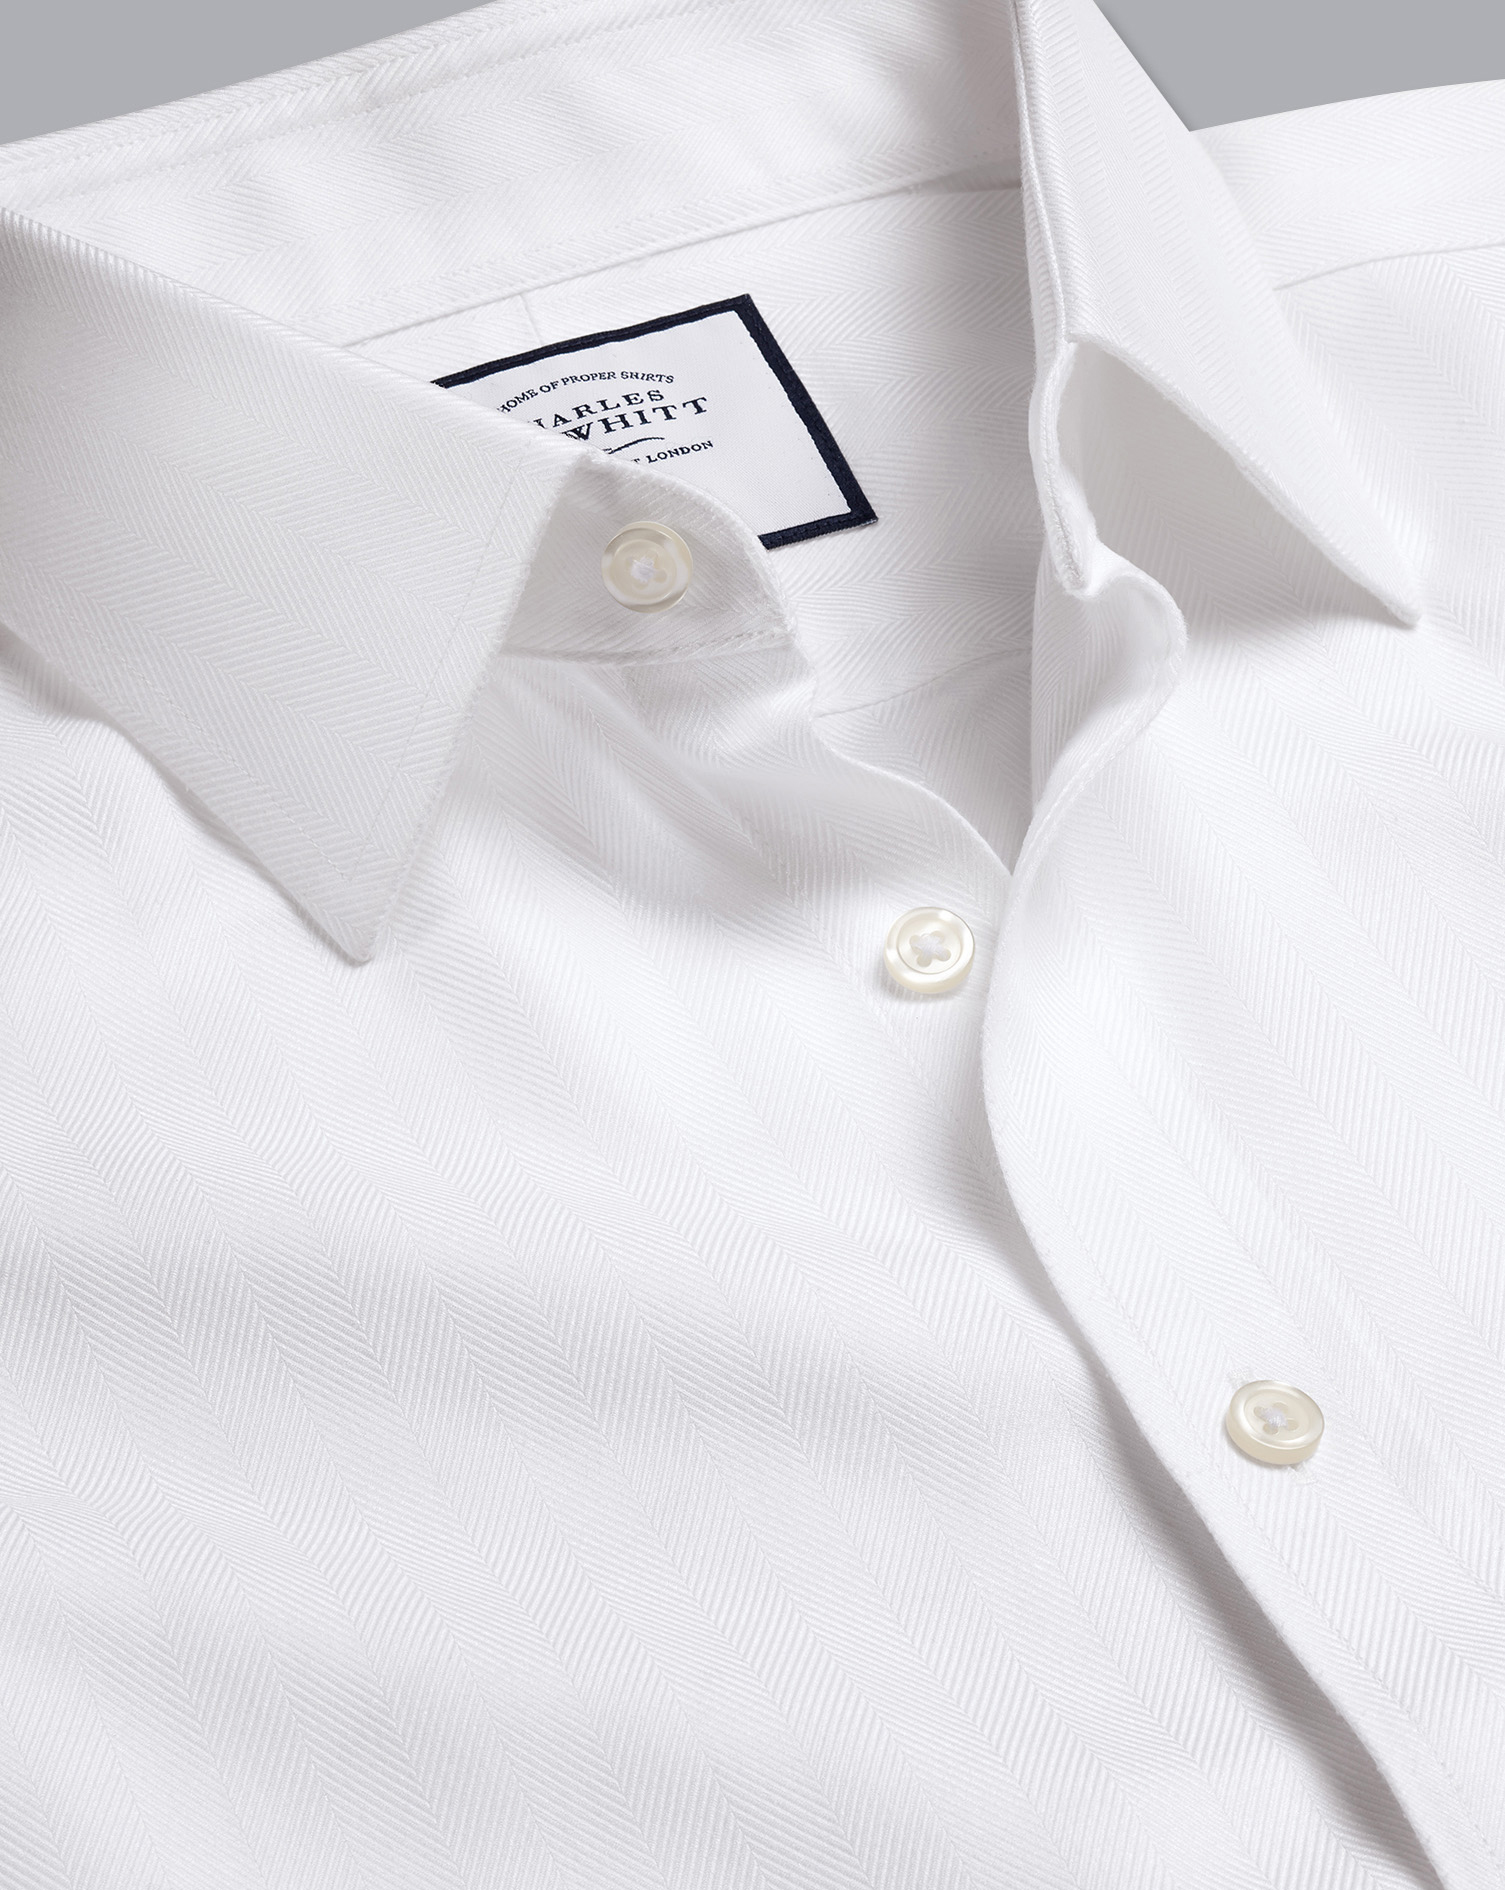 Men's Charles Tyrwhitt Non-Iron Herringbone Dress Shirt - White French Cuff Size XXXL Cotton
